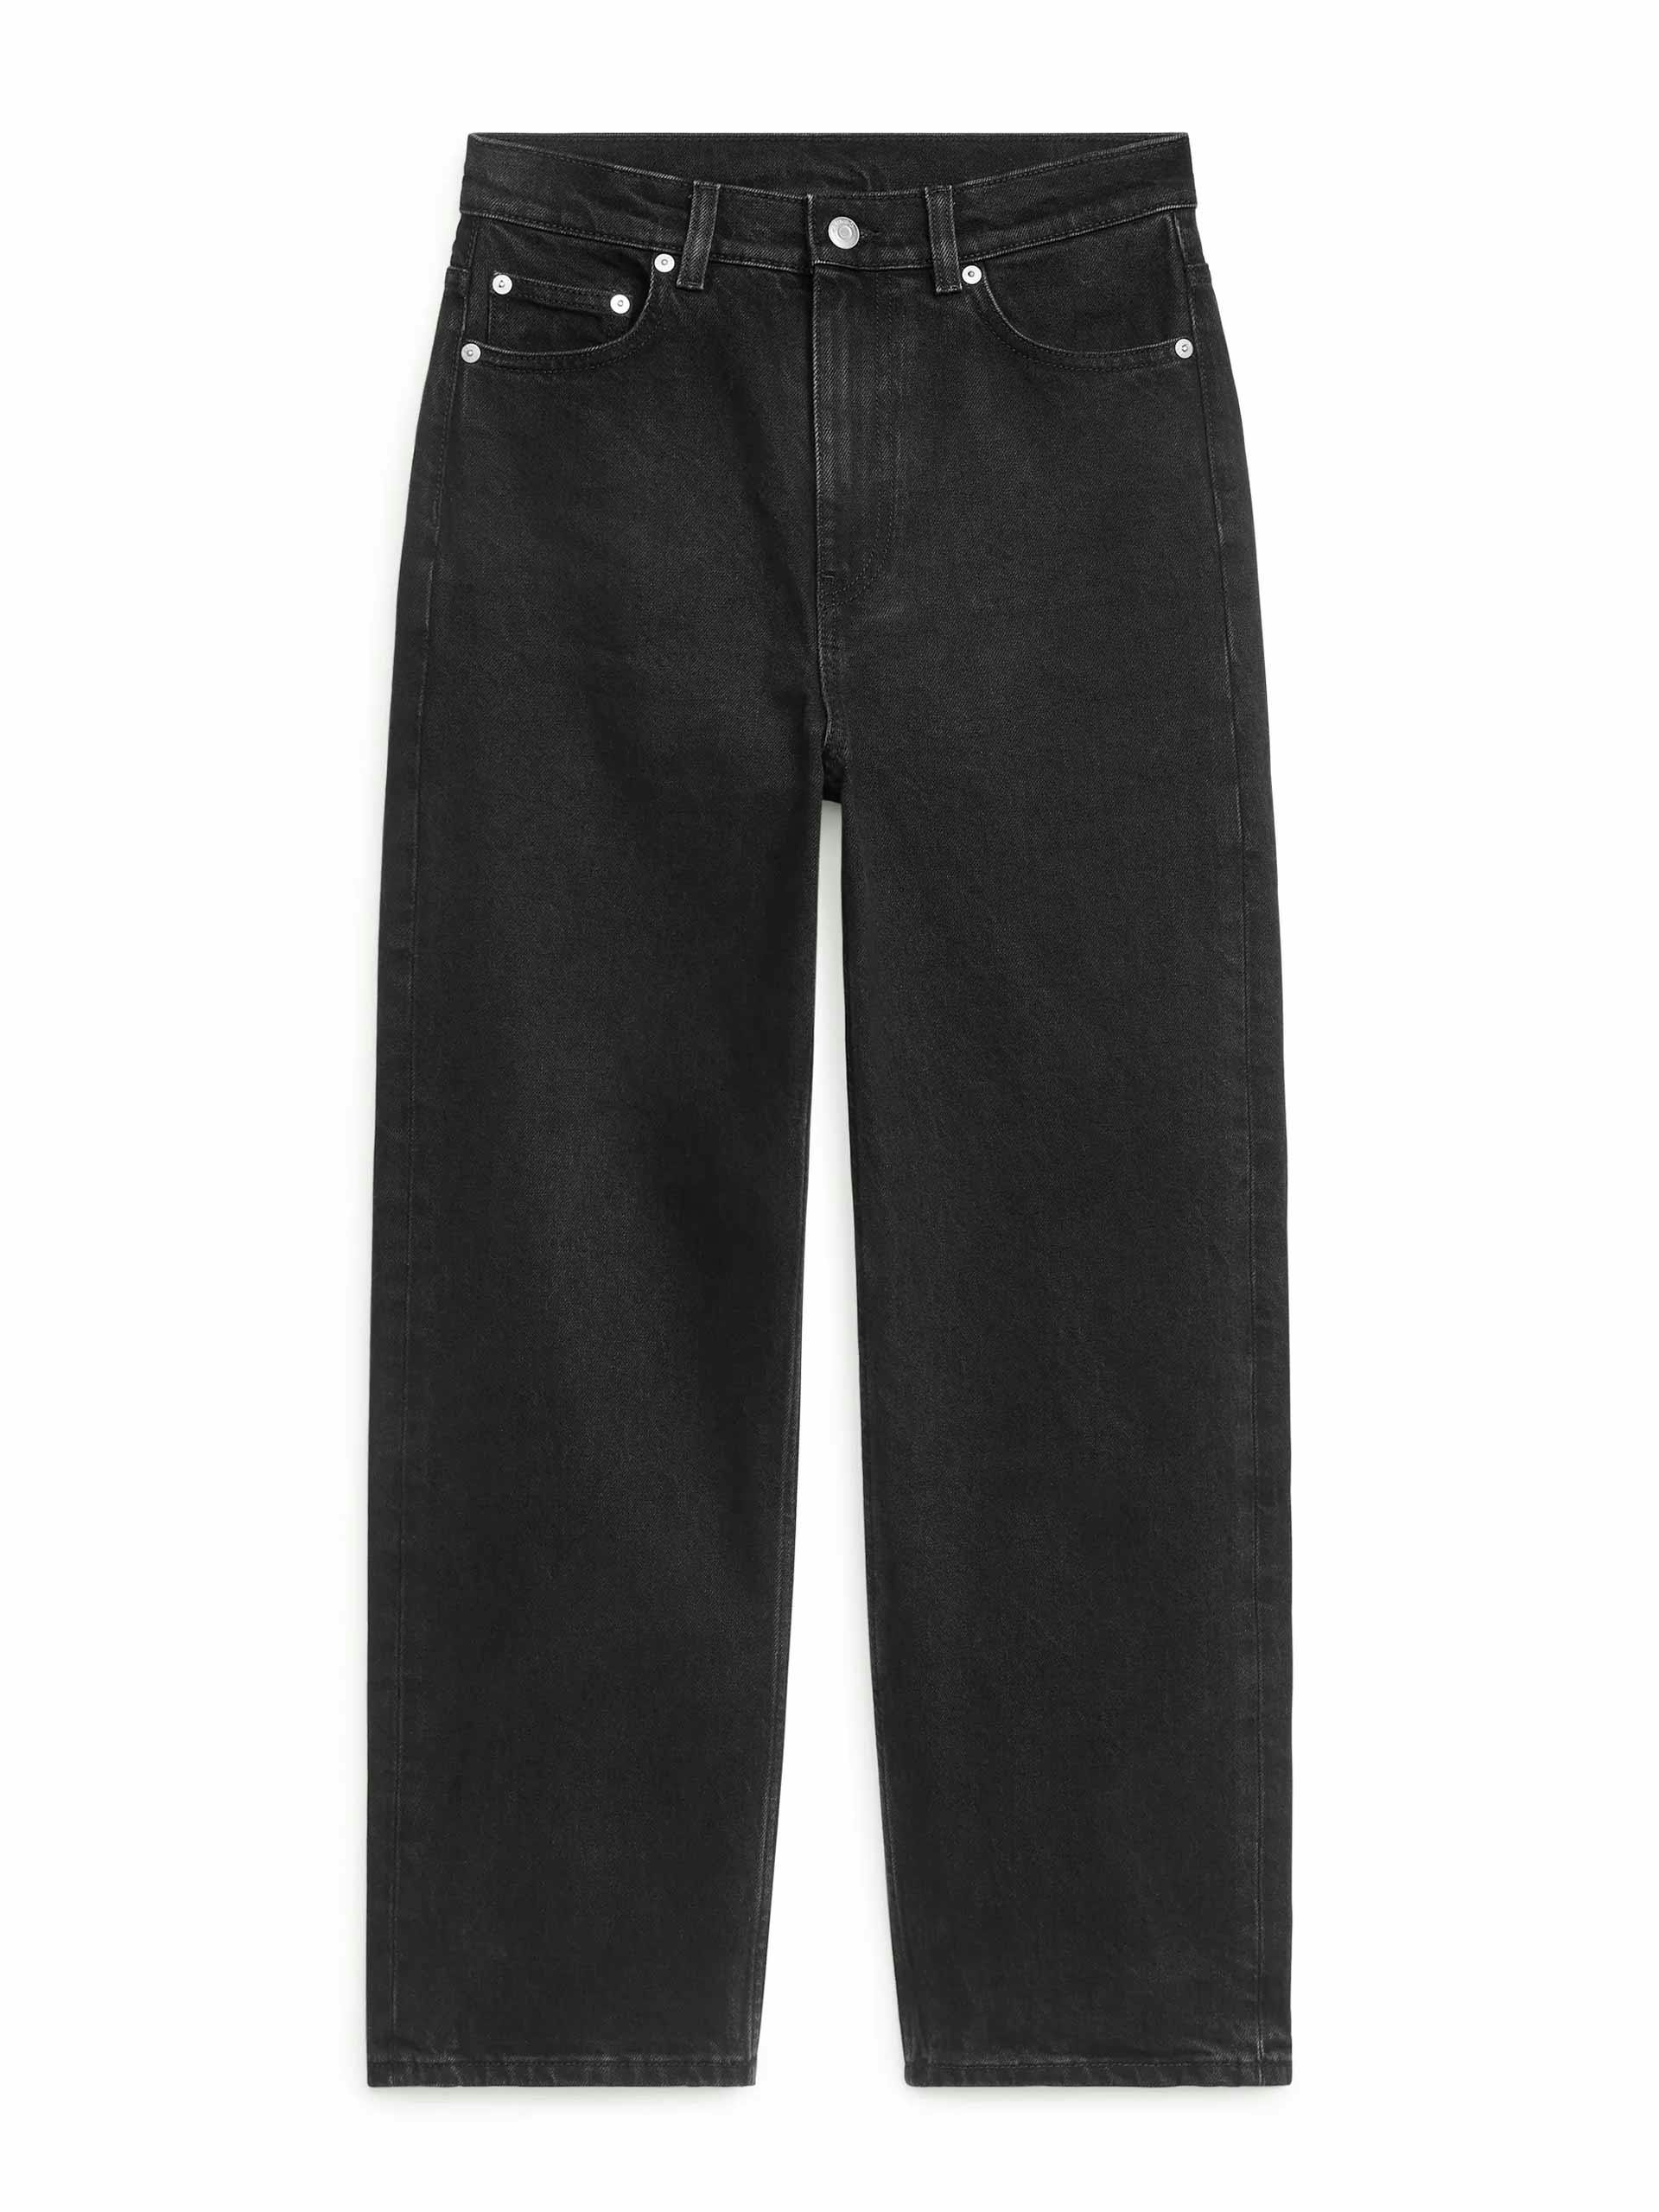 Grey/black cropped jeans